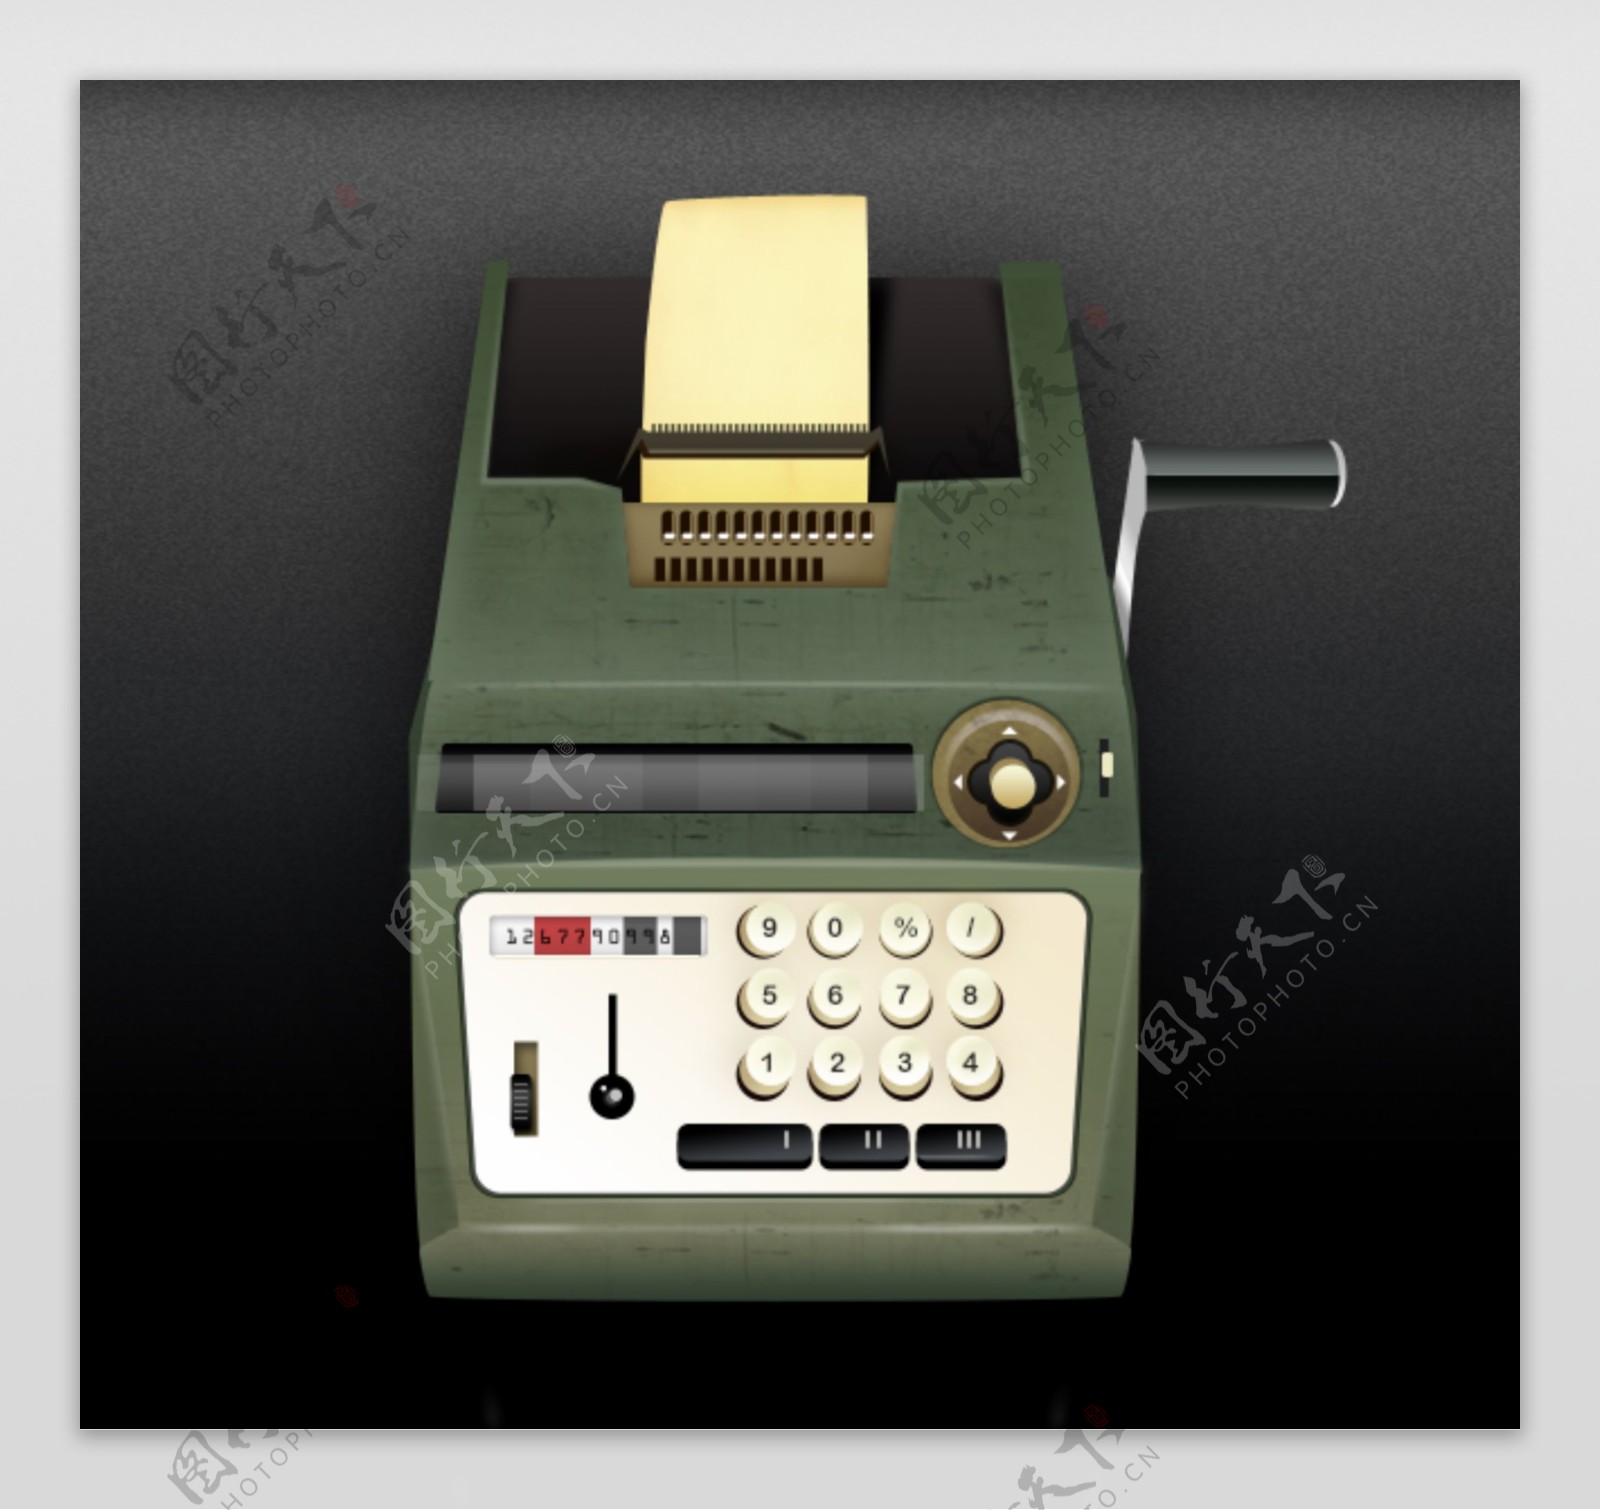 老式电话机icon图标设计